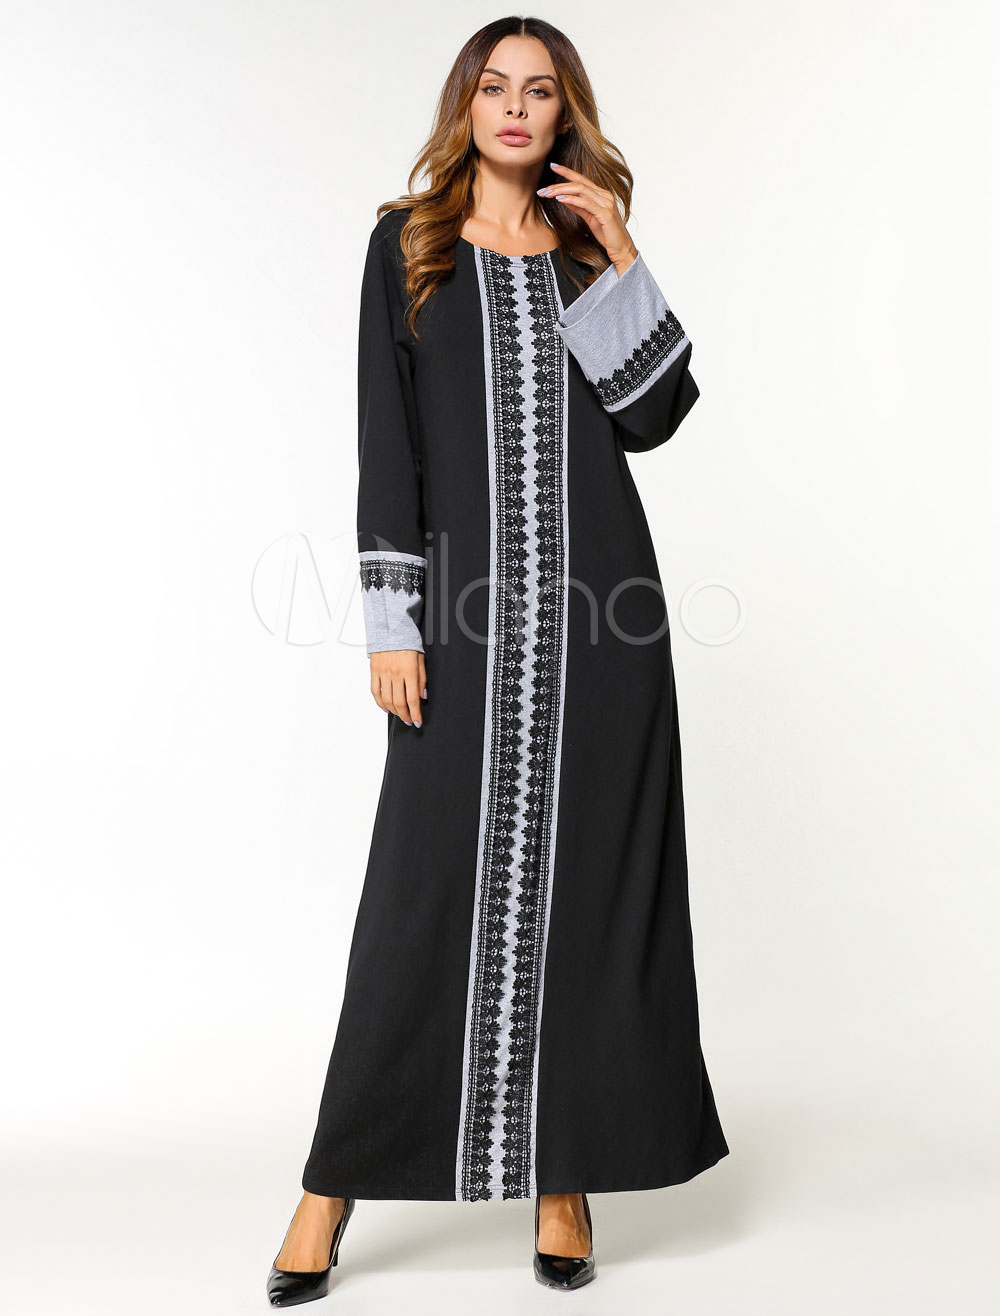 Black Abaya Dress Muslim Oversized Lace Long Sleeve Women Maxi Kaftan Dress (Women\\'s Clothing Arabian Clothing) photo